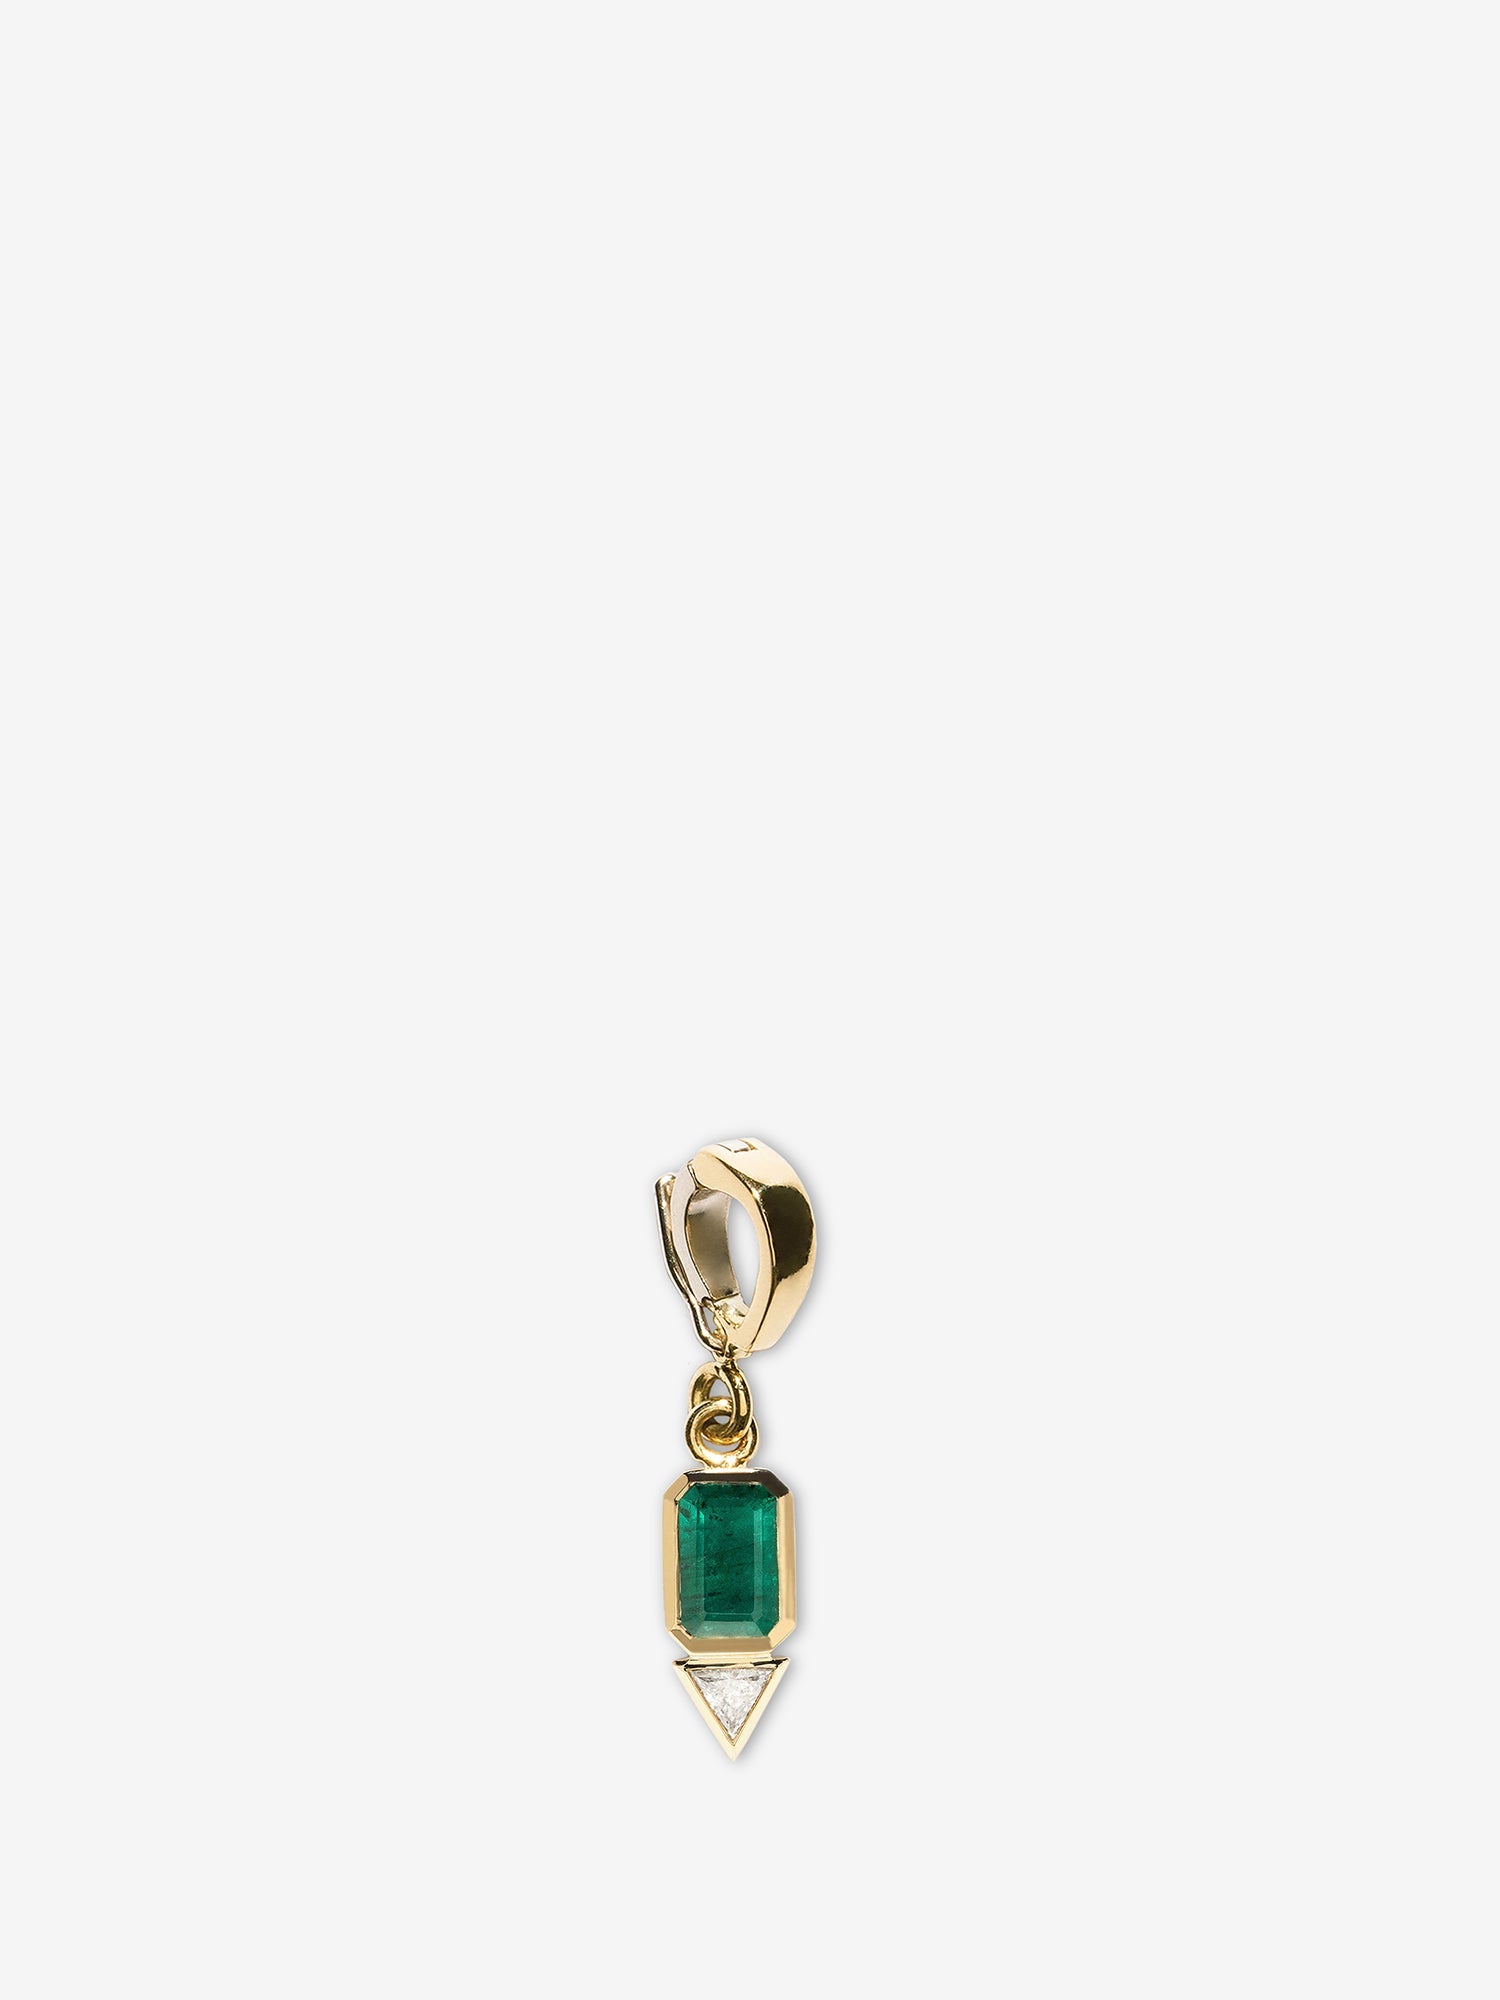 Emerald and Trillion Small Diamond Charm